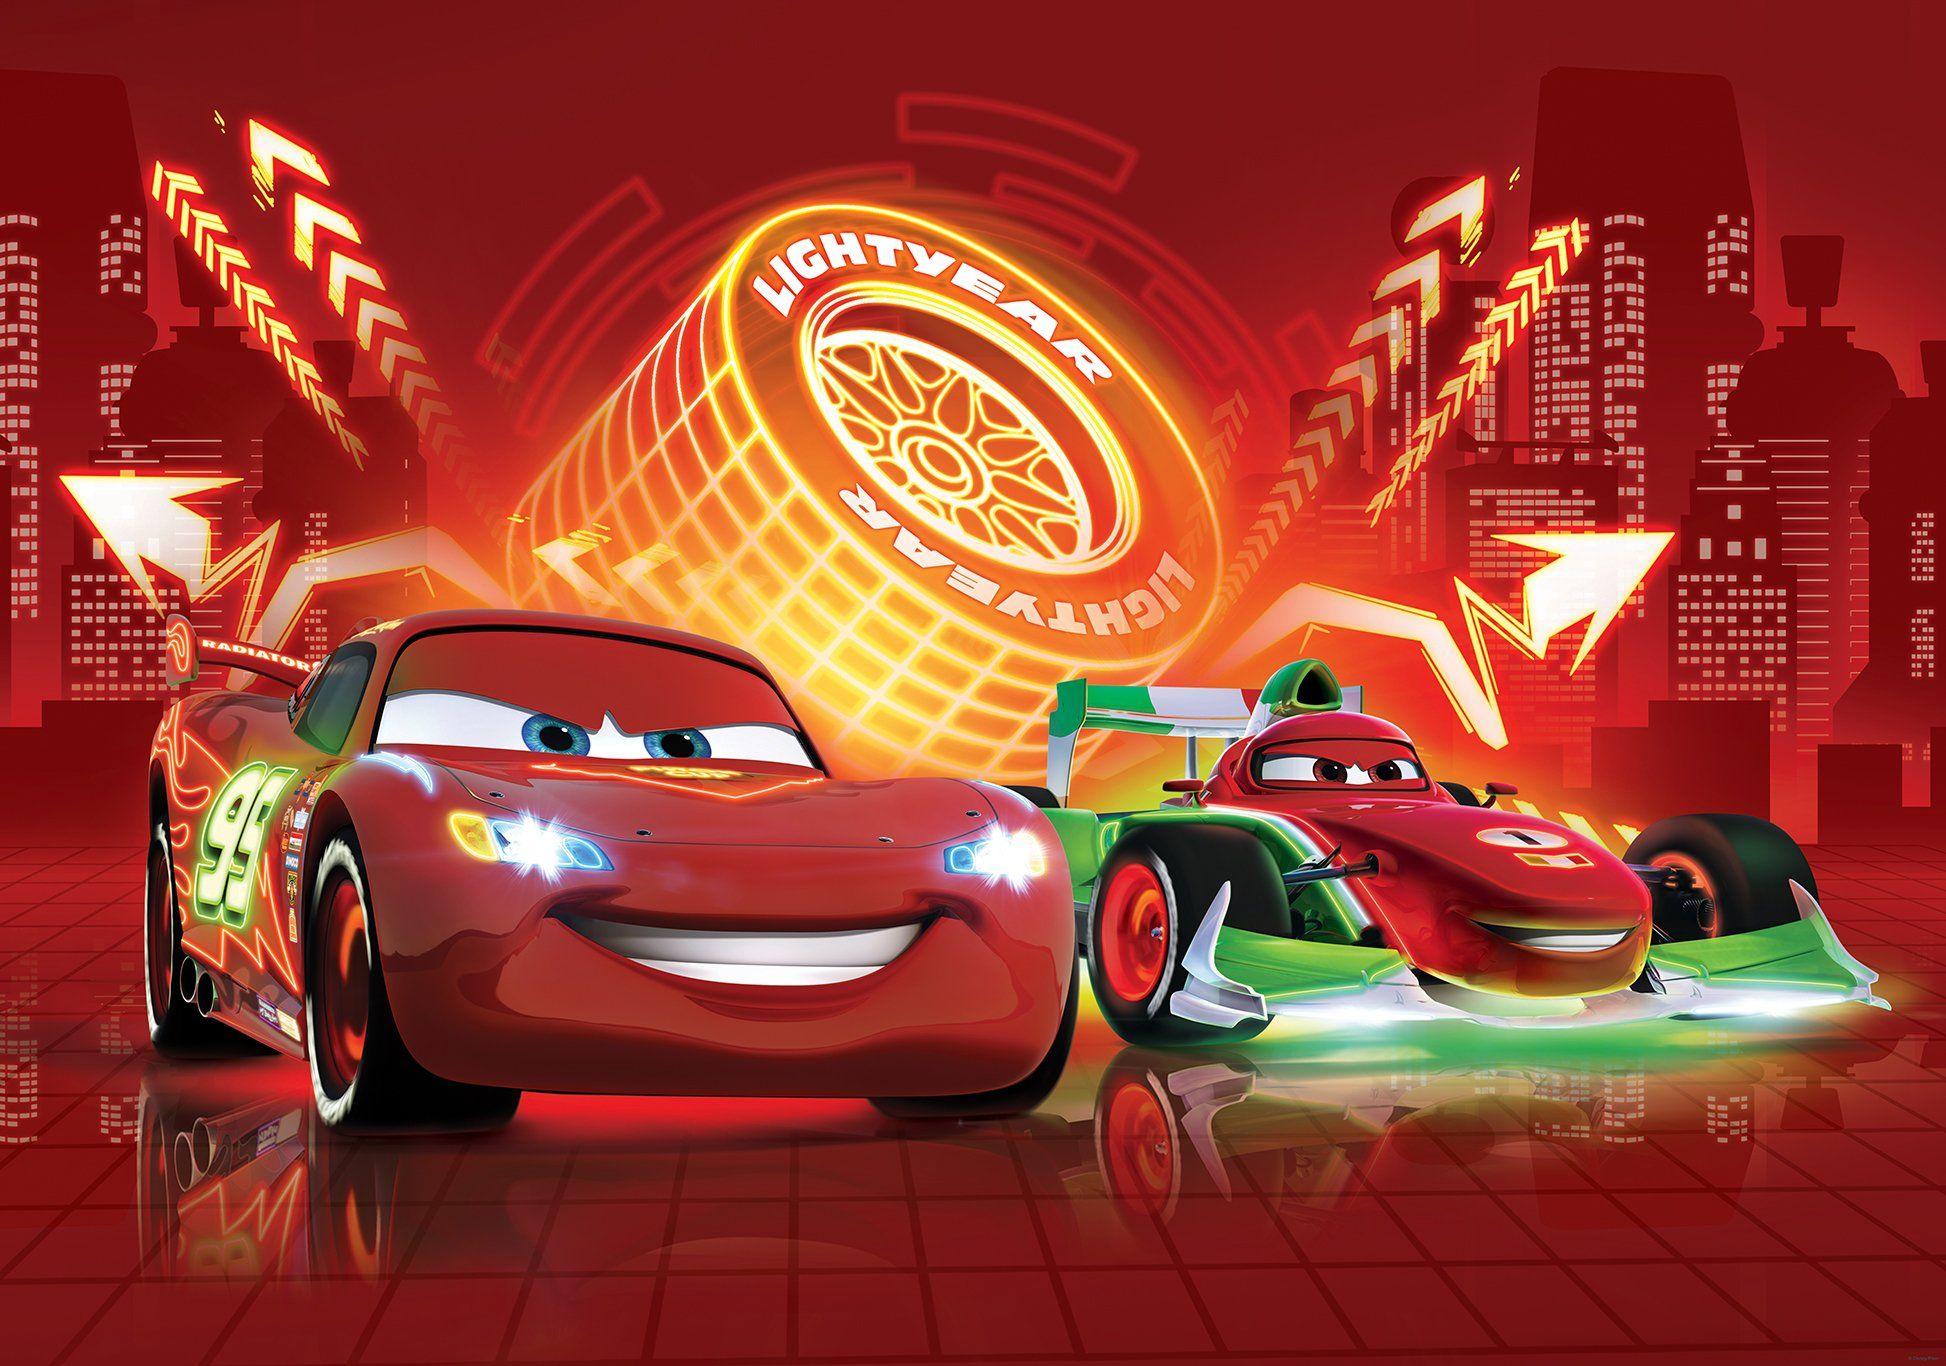 Cars Lightning McQueen Wallpapers Top Free Cars Lightning McQueen